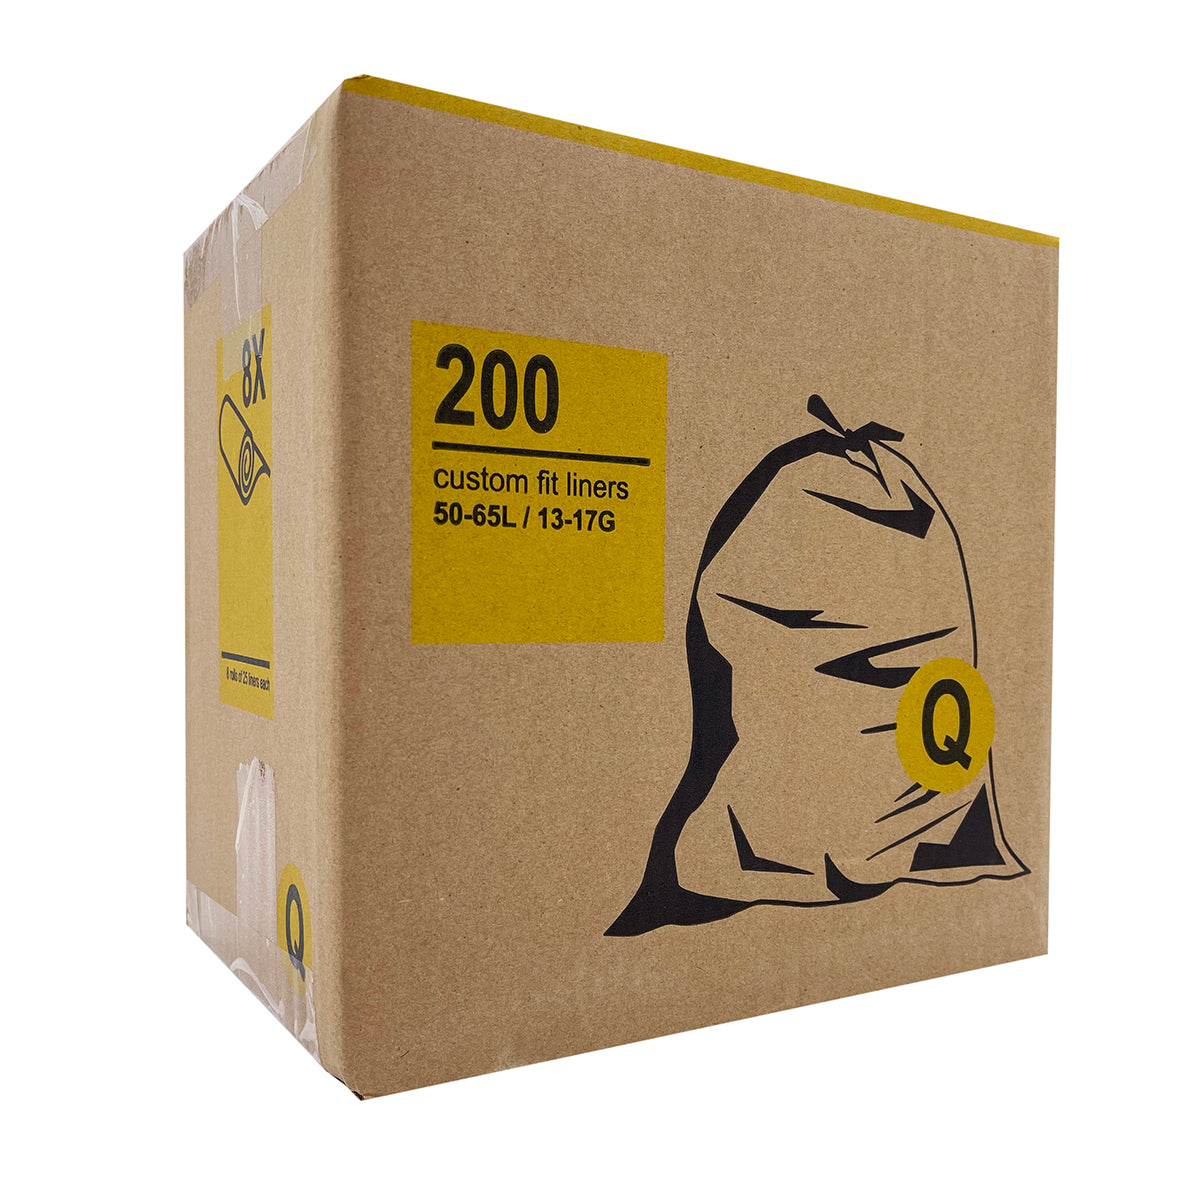 simplehuman custom trash bag liner alternative code Q 13-17 gallons